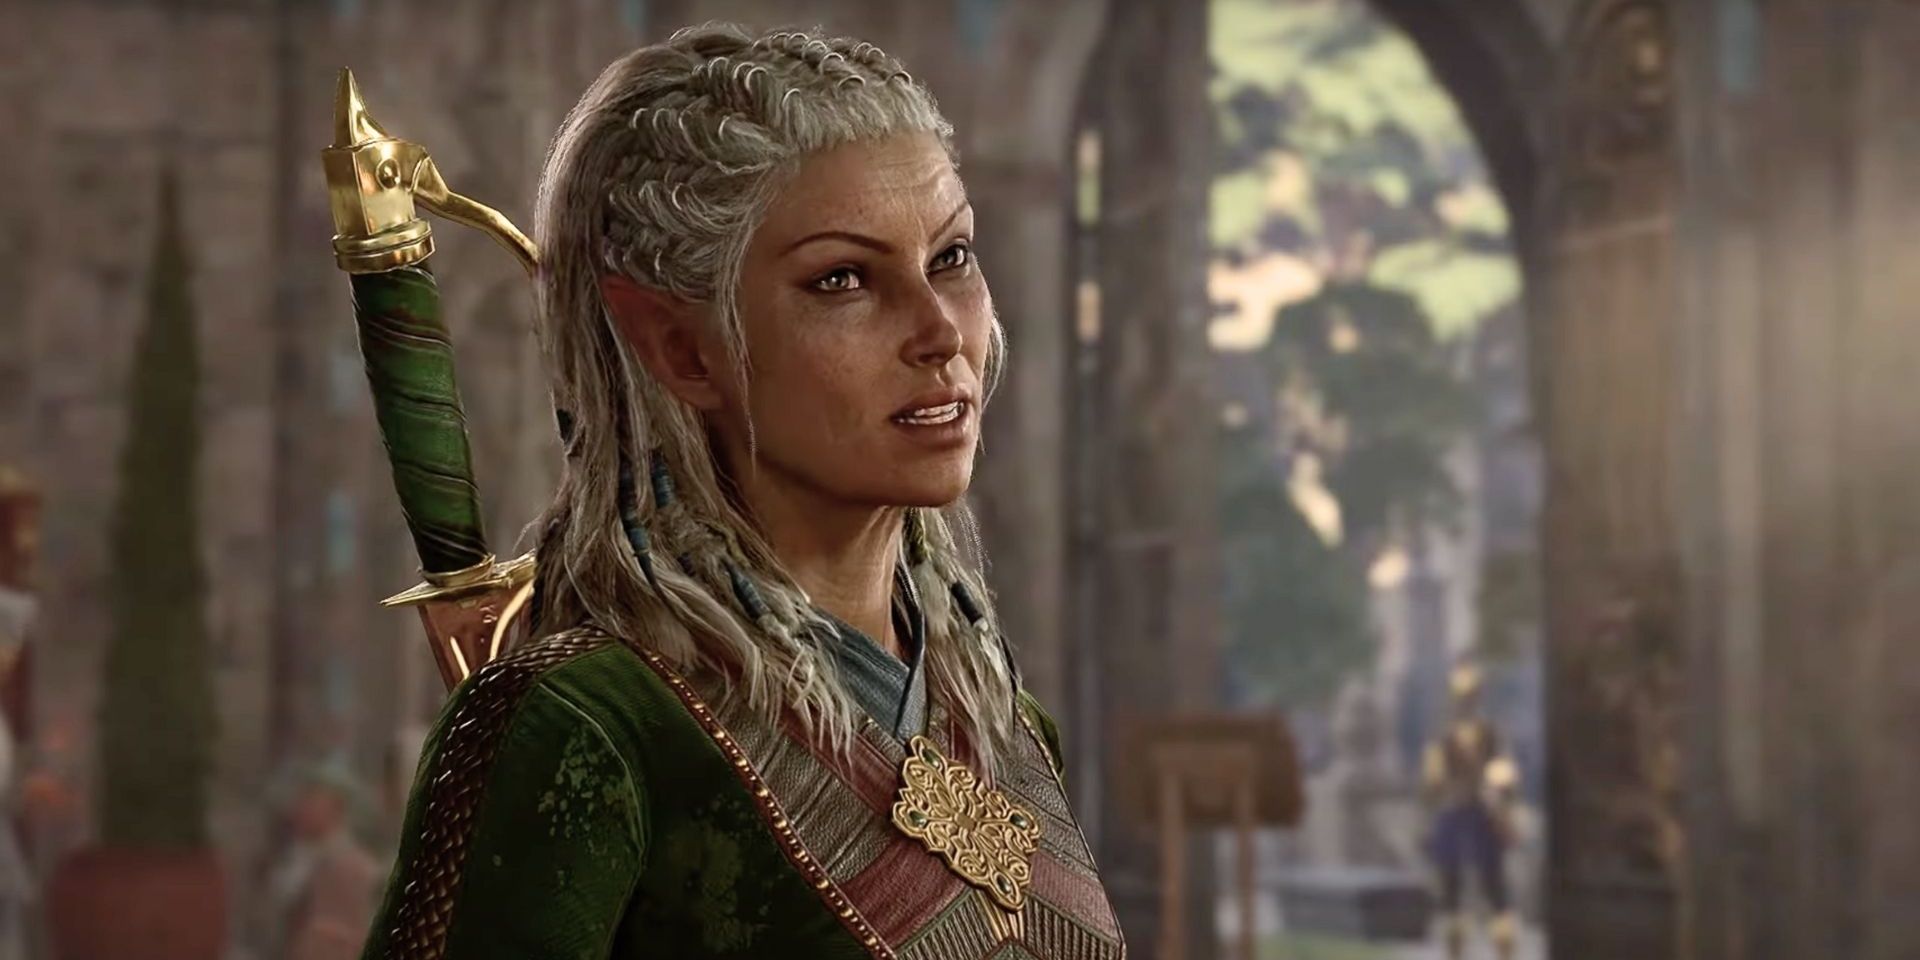 Jaheira grits her teeth near a great stone doorway in a screenshot from Baldur's Gate 3.